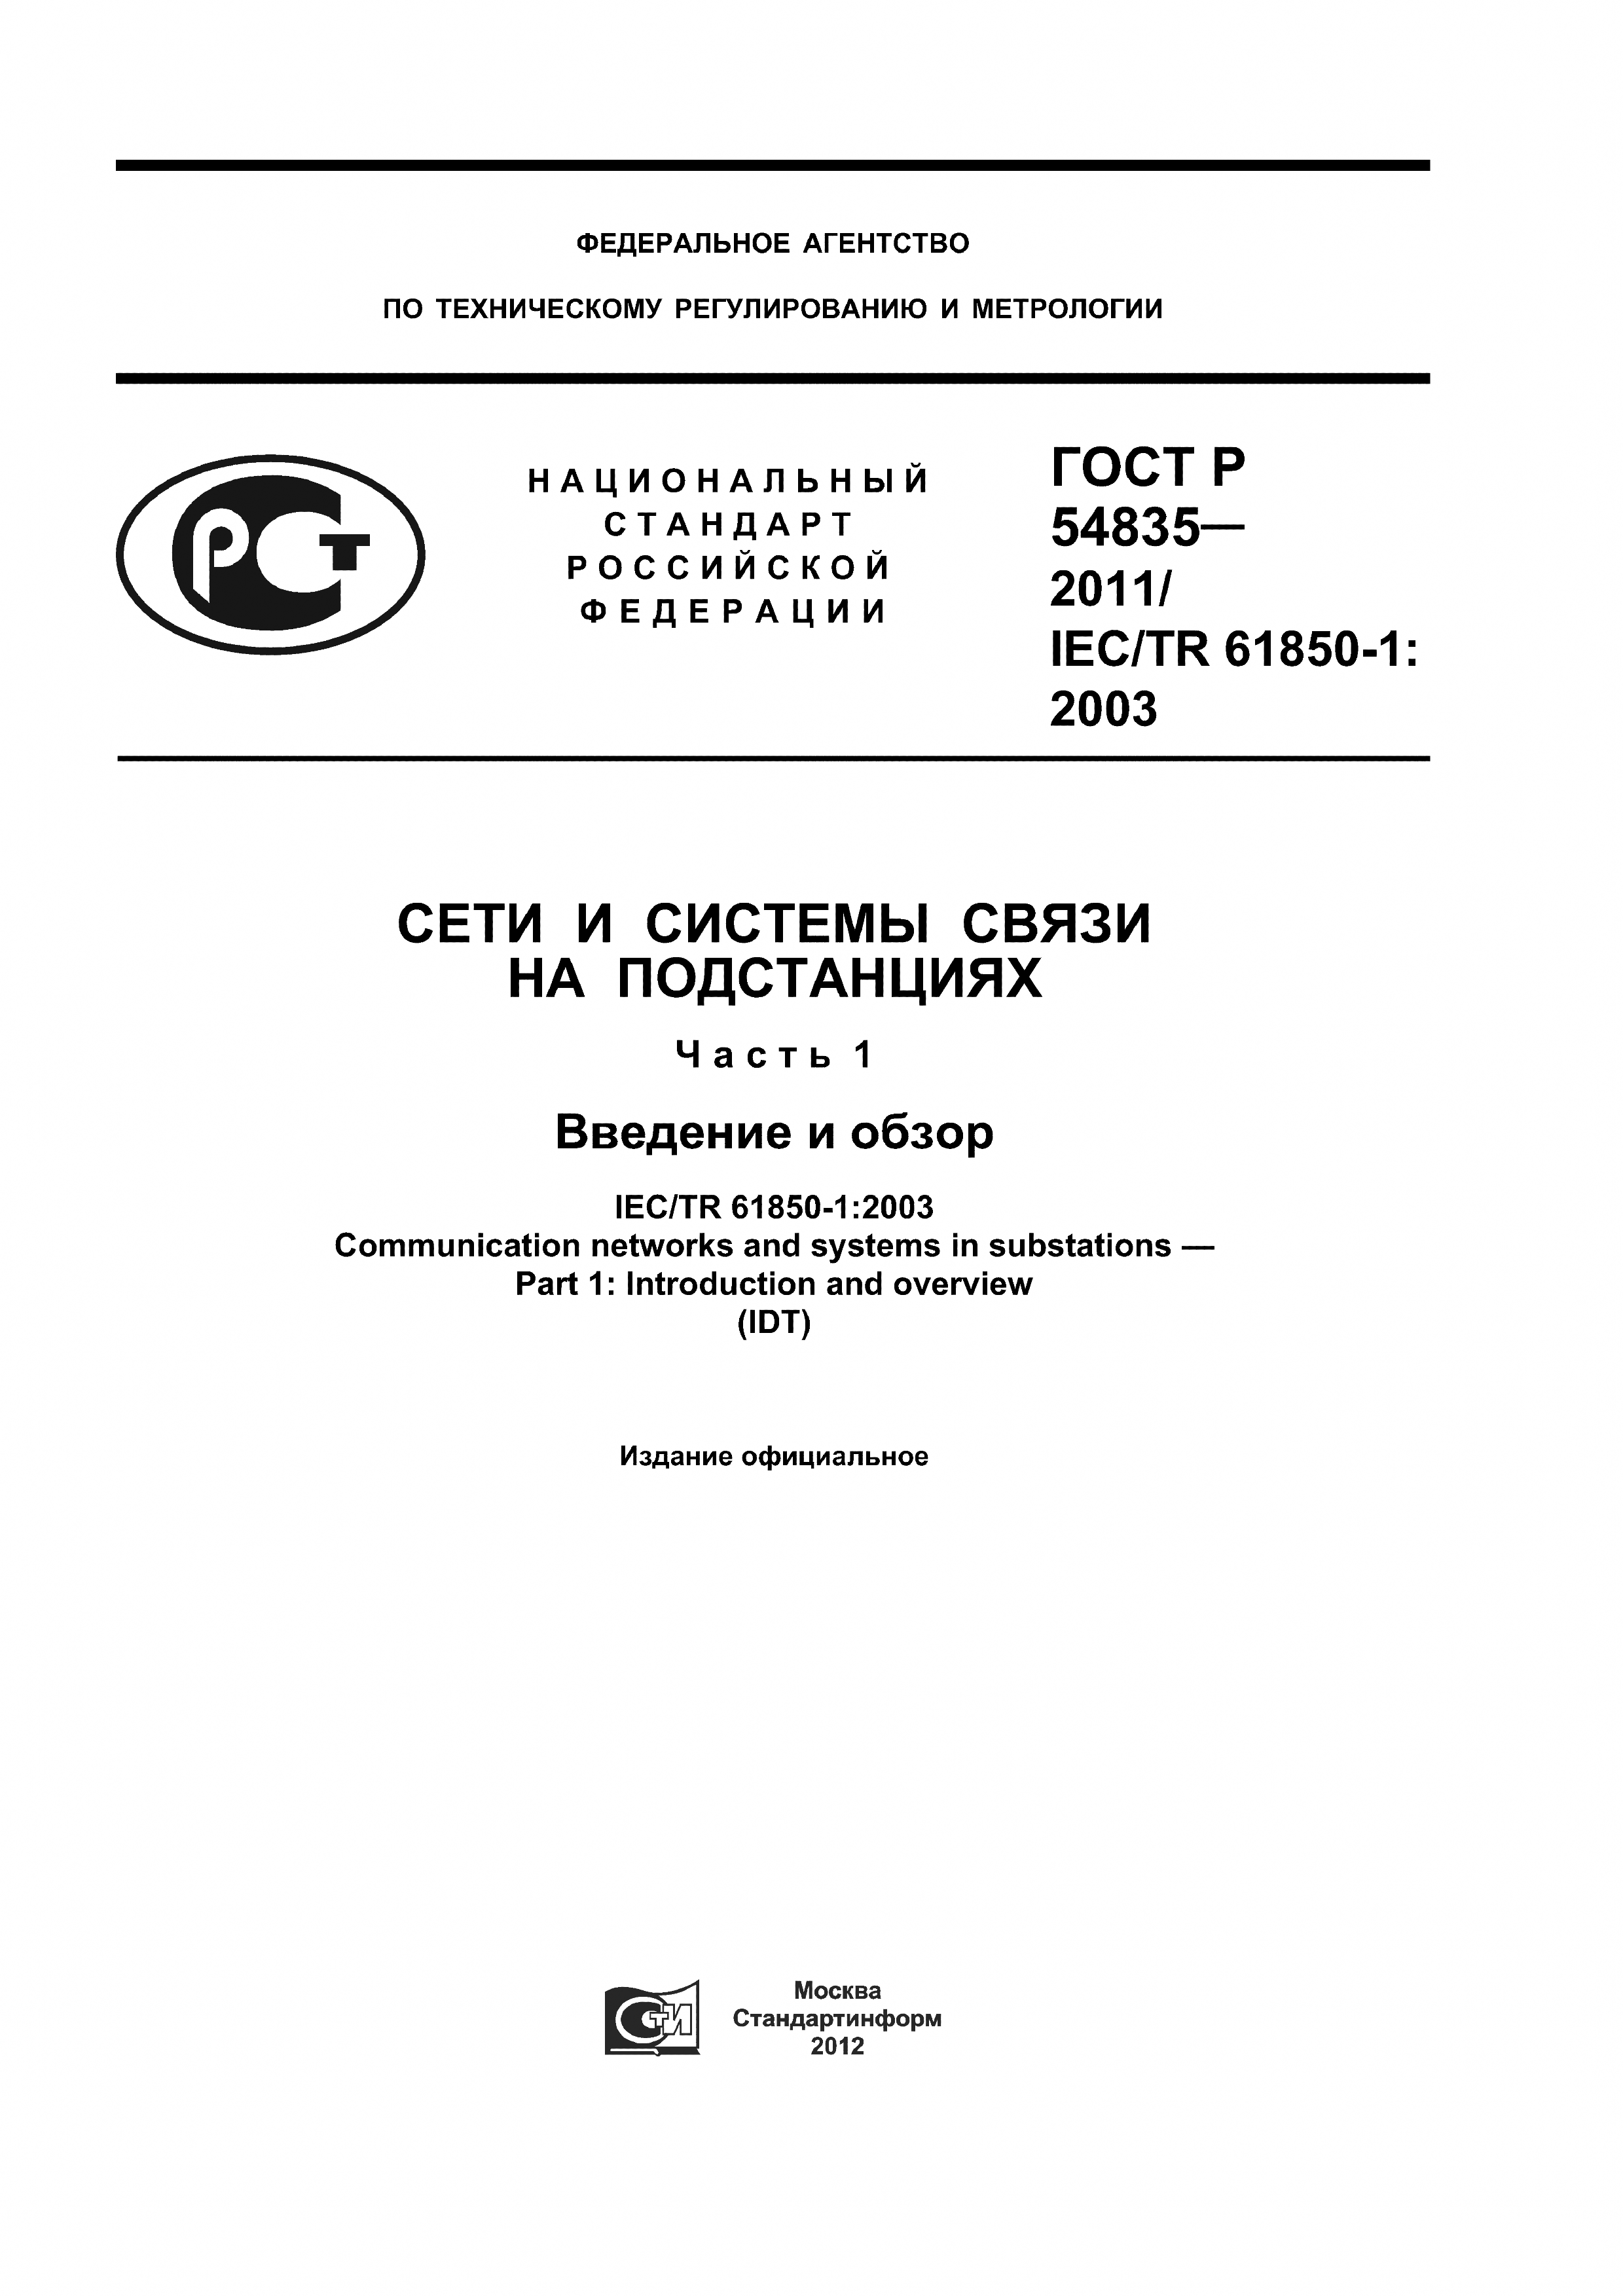 ГОСТ Р 54835-2011